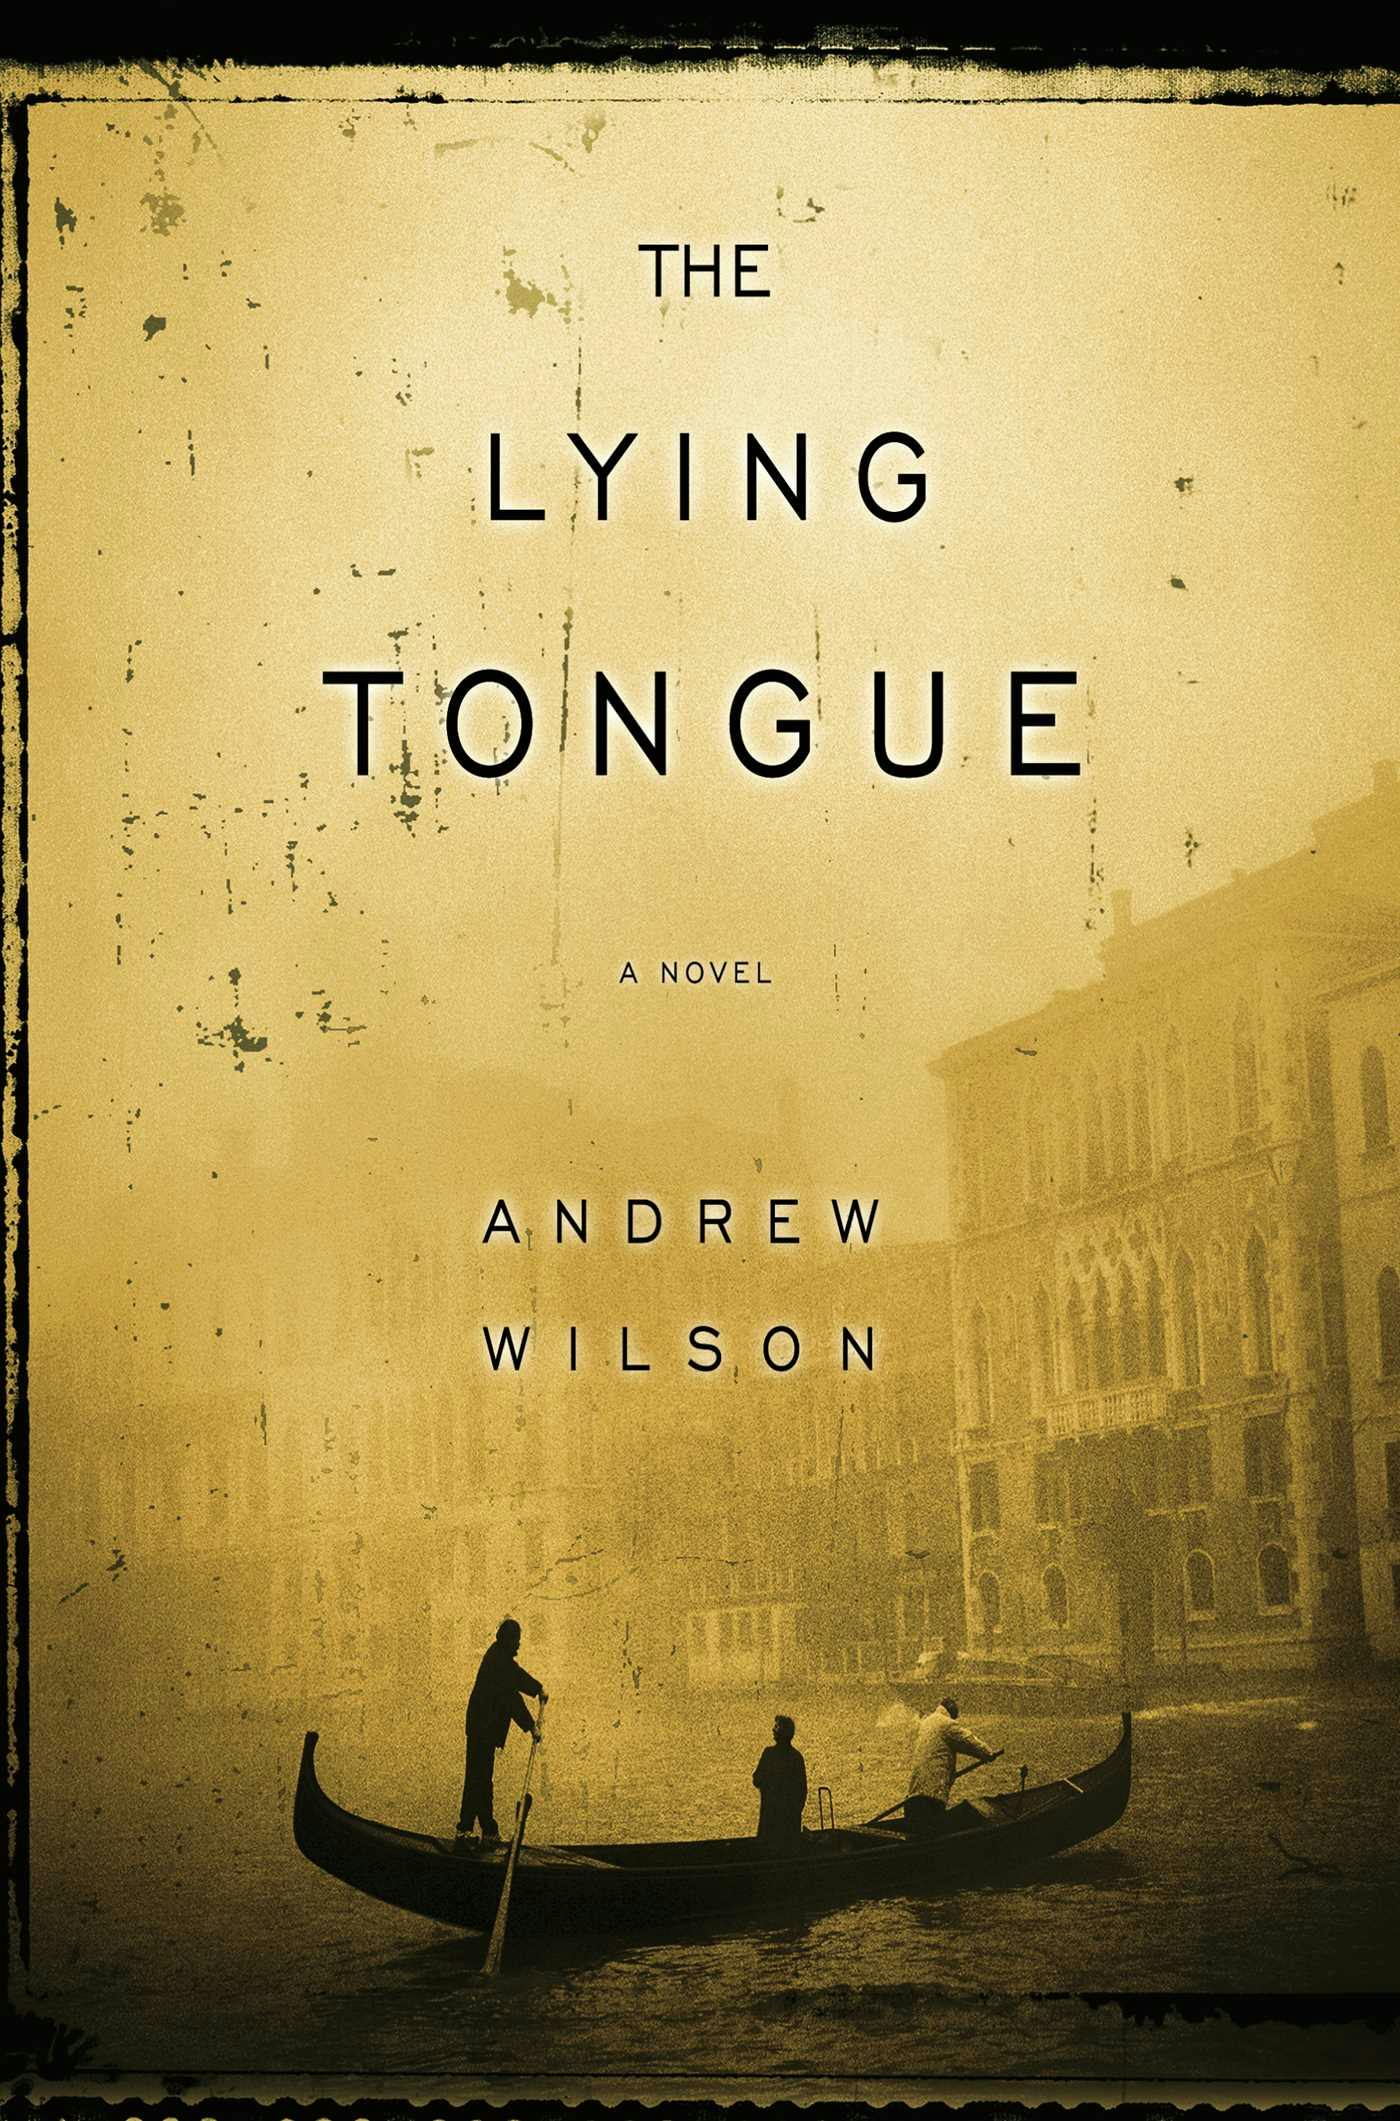 The Lying Tongue - Andrew Wilson